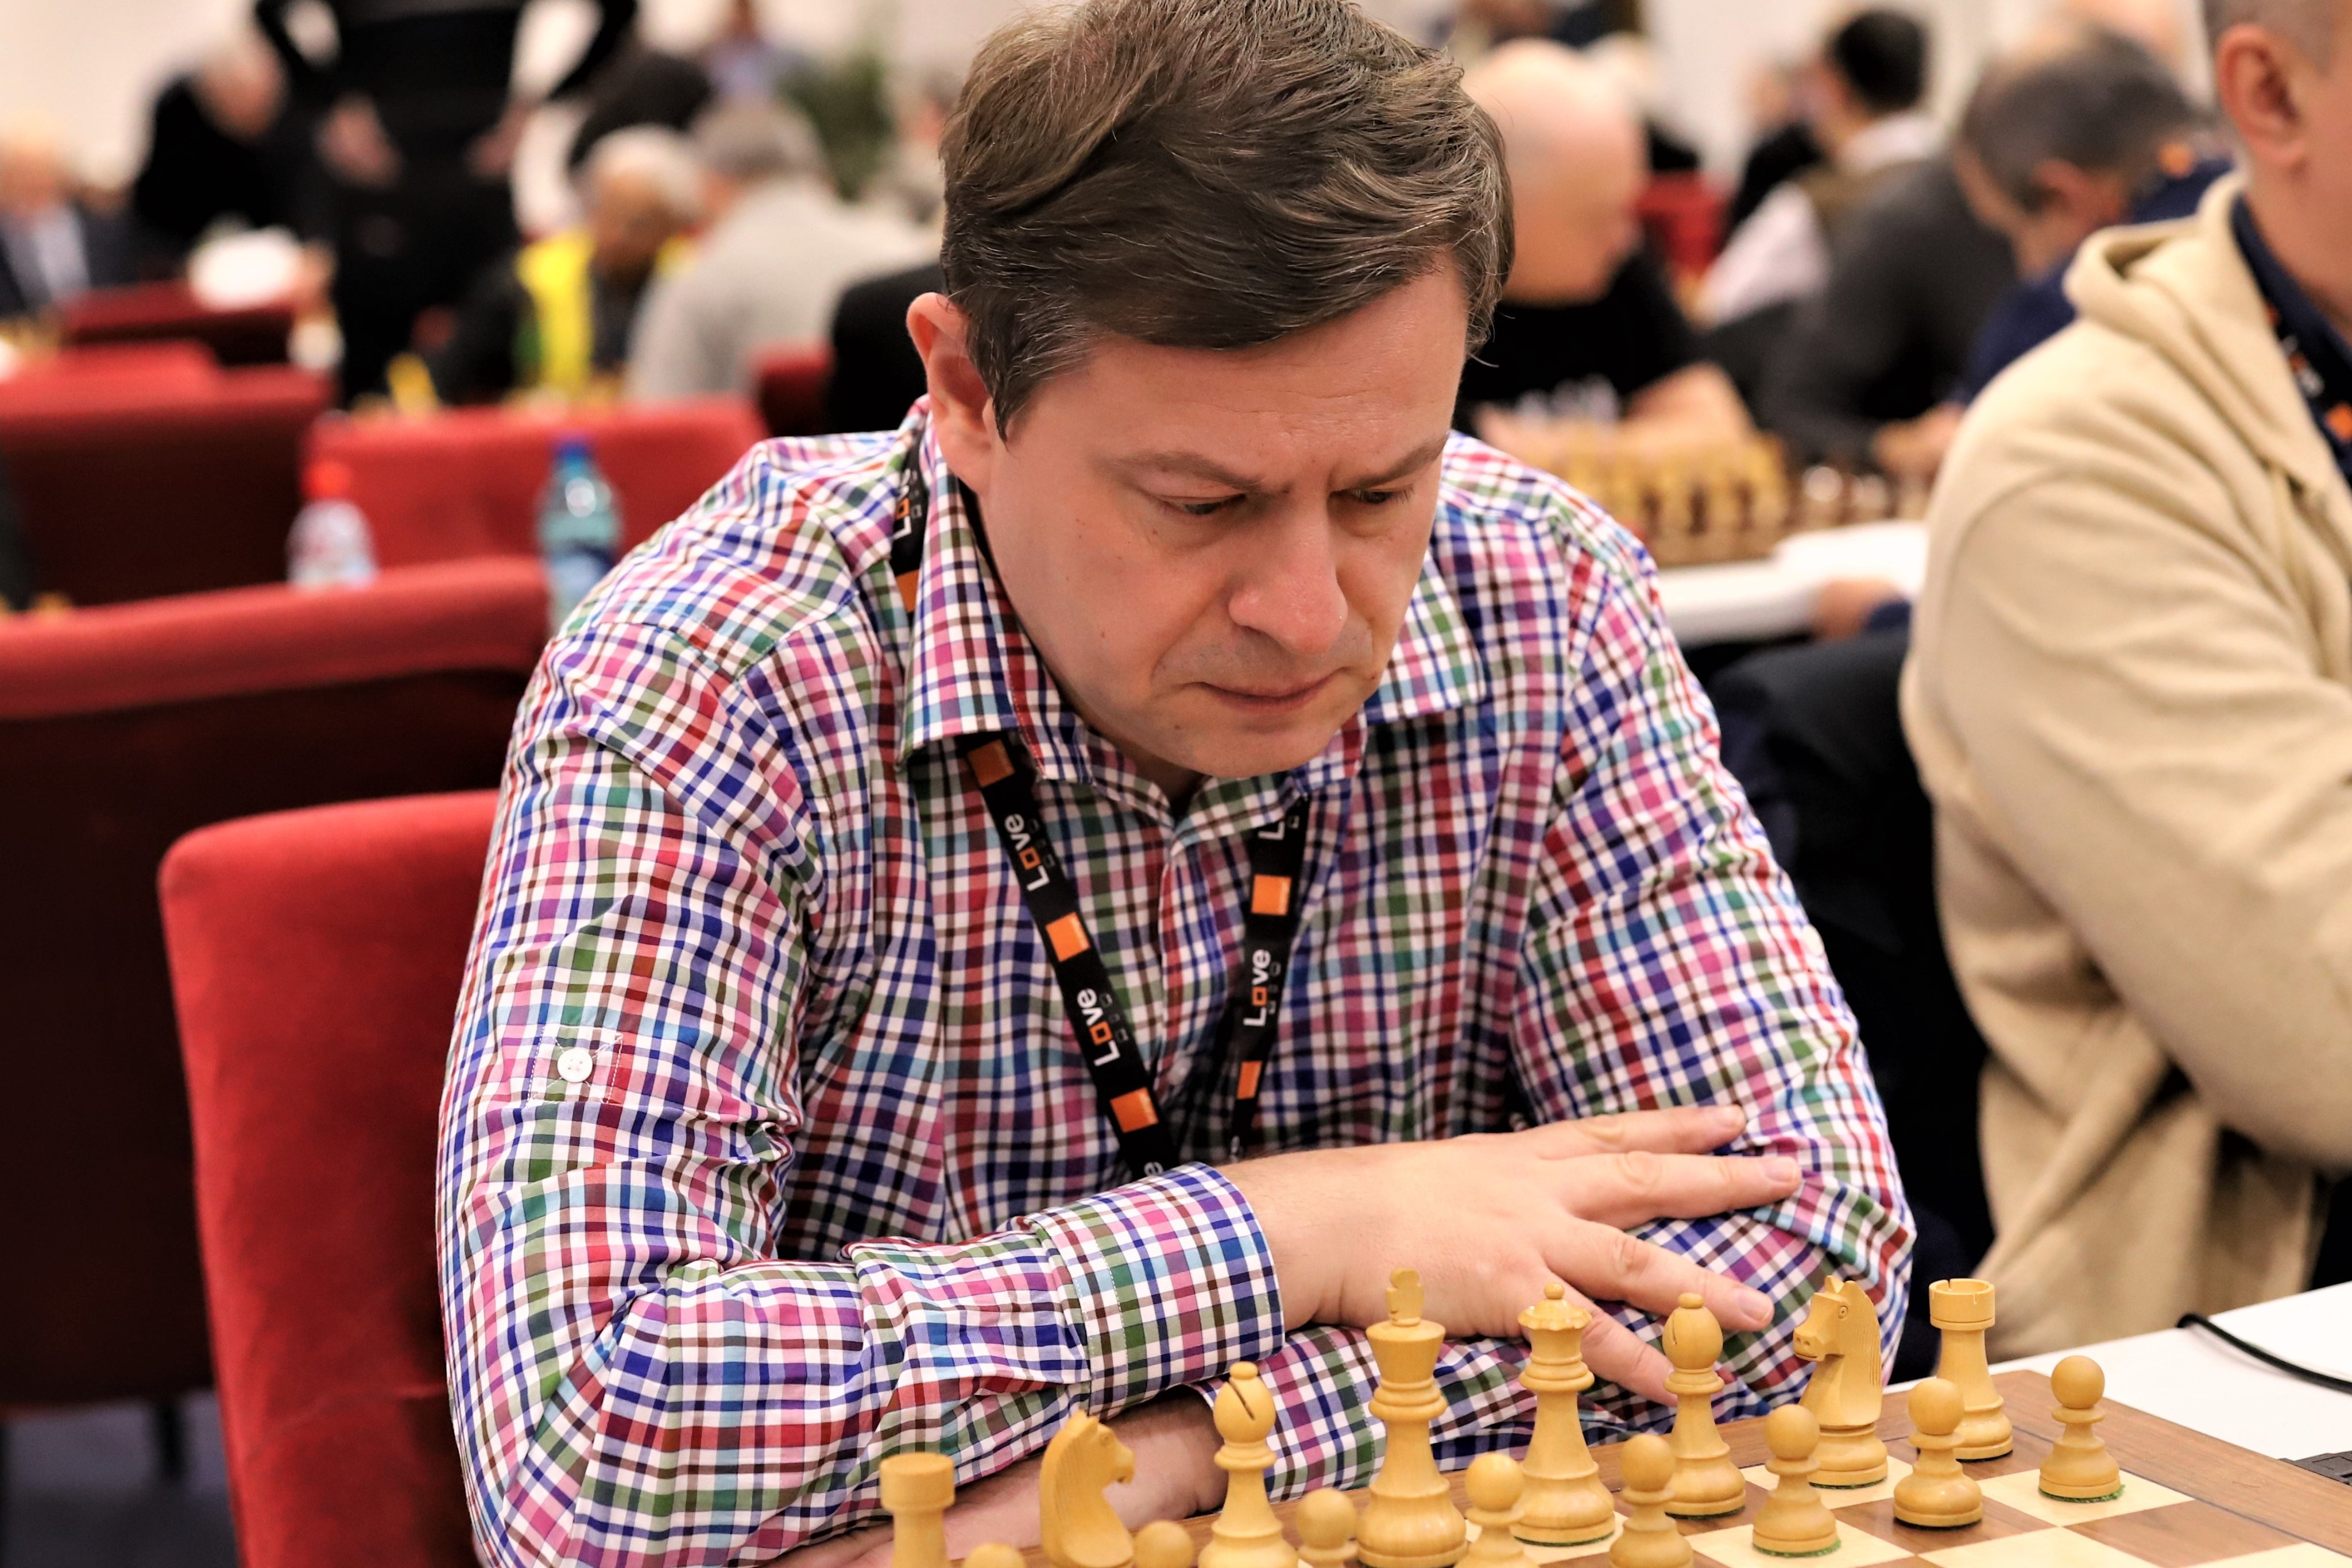 Episode 6 of - FIDE - International Chess Federation